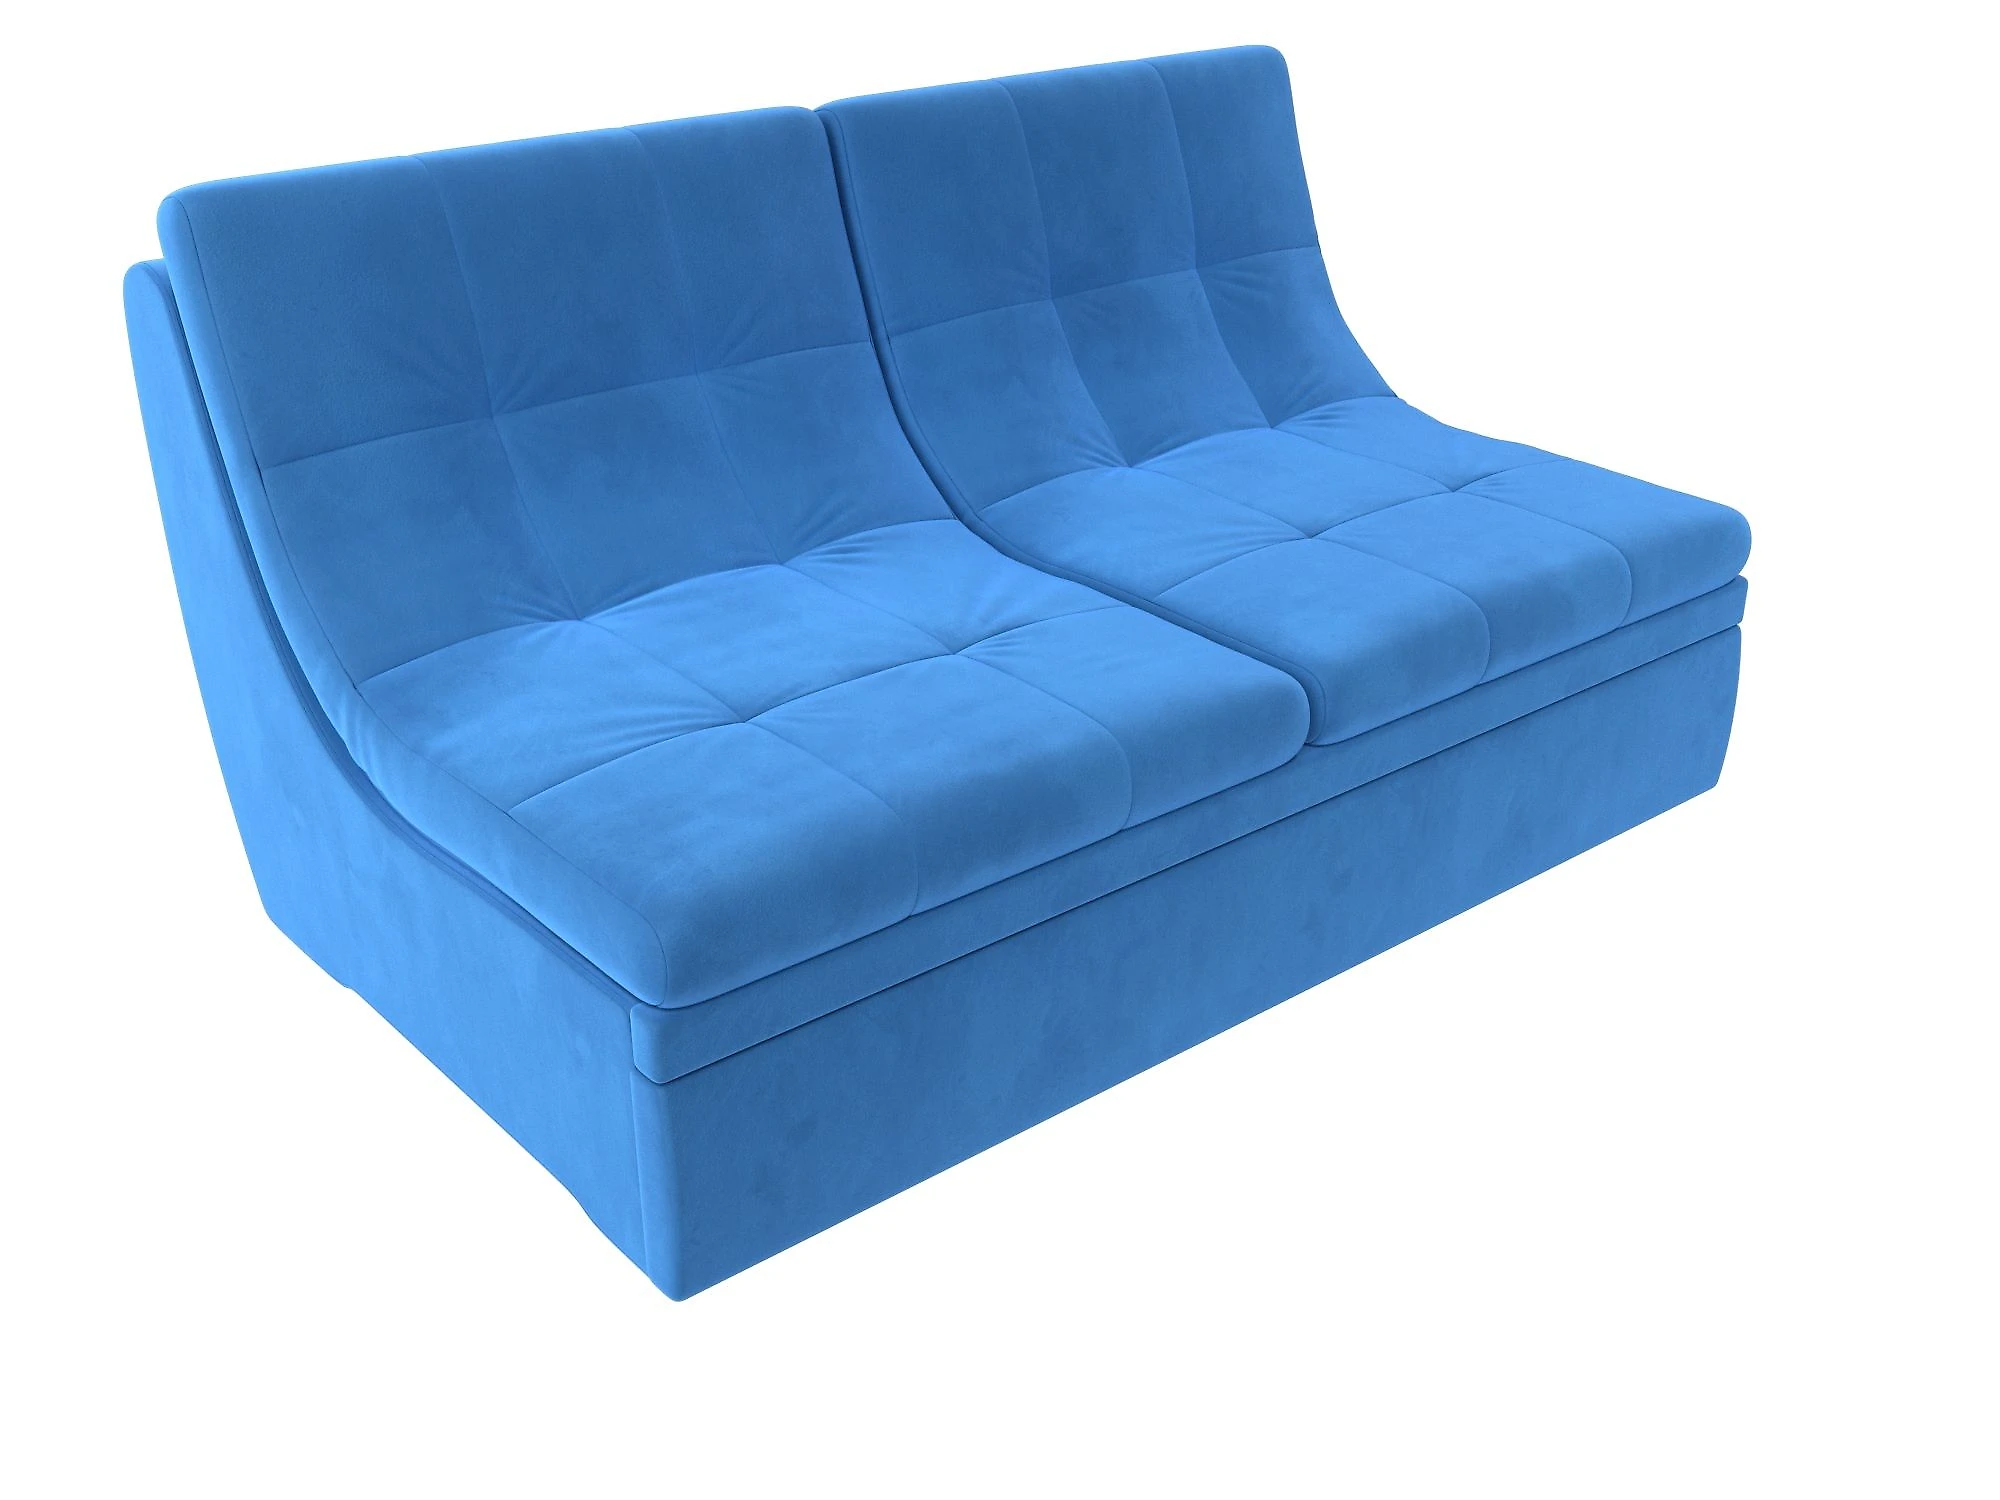  голубой диван  Холидей Плюш Дизайн 6